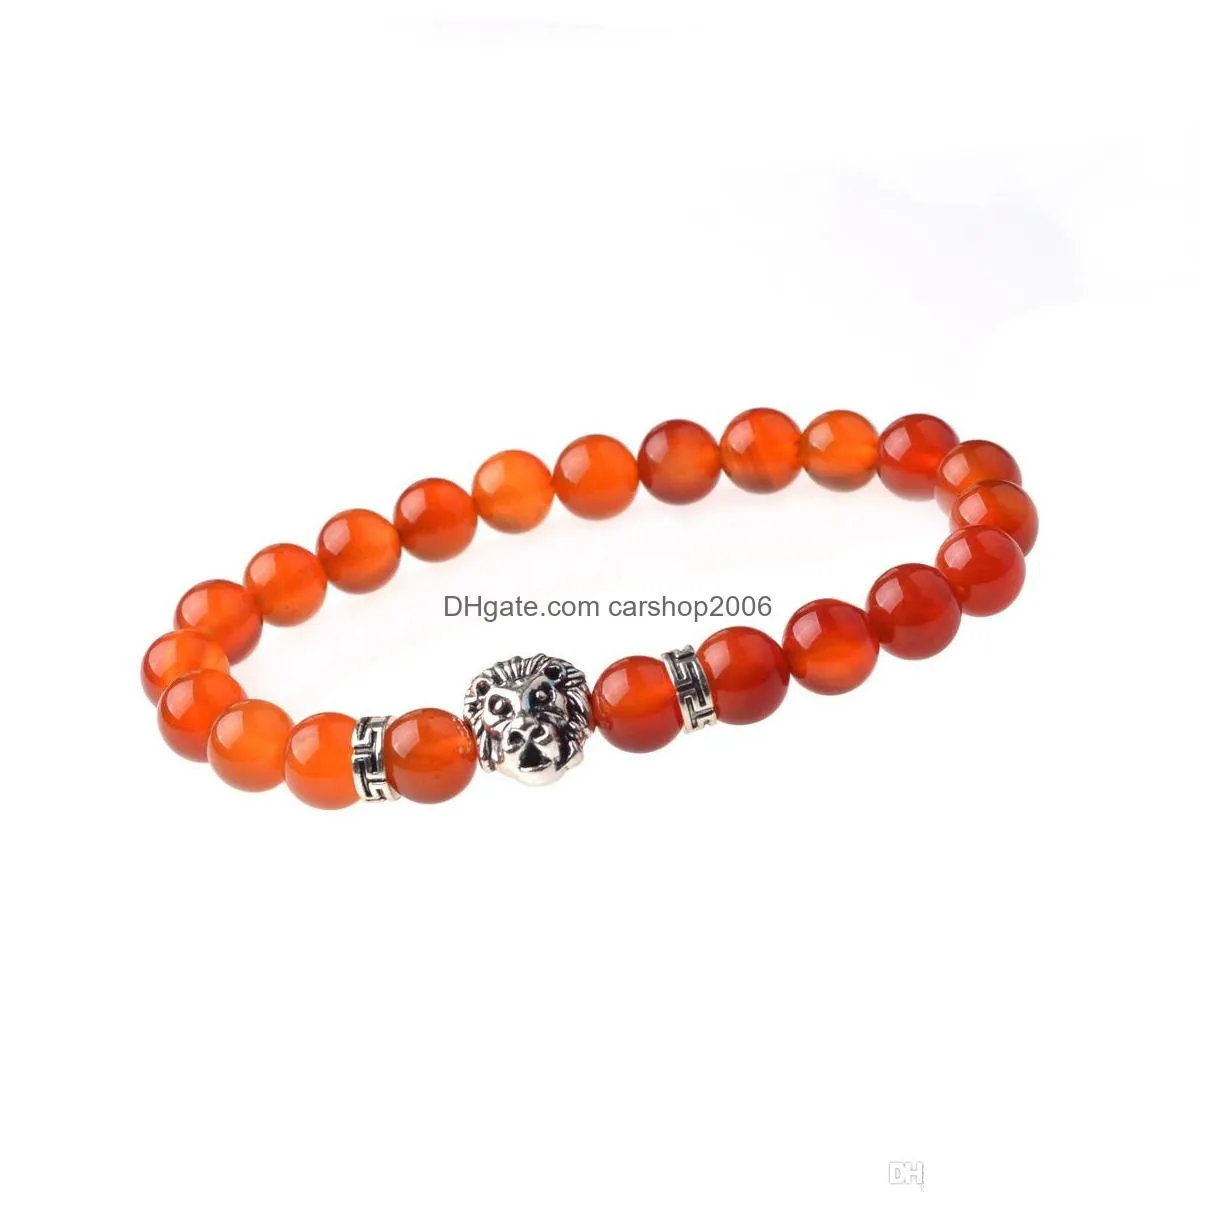 buddhist faith charm bracelet natural stone yoga gem prayer bracelet unisex